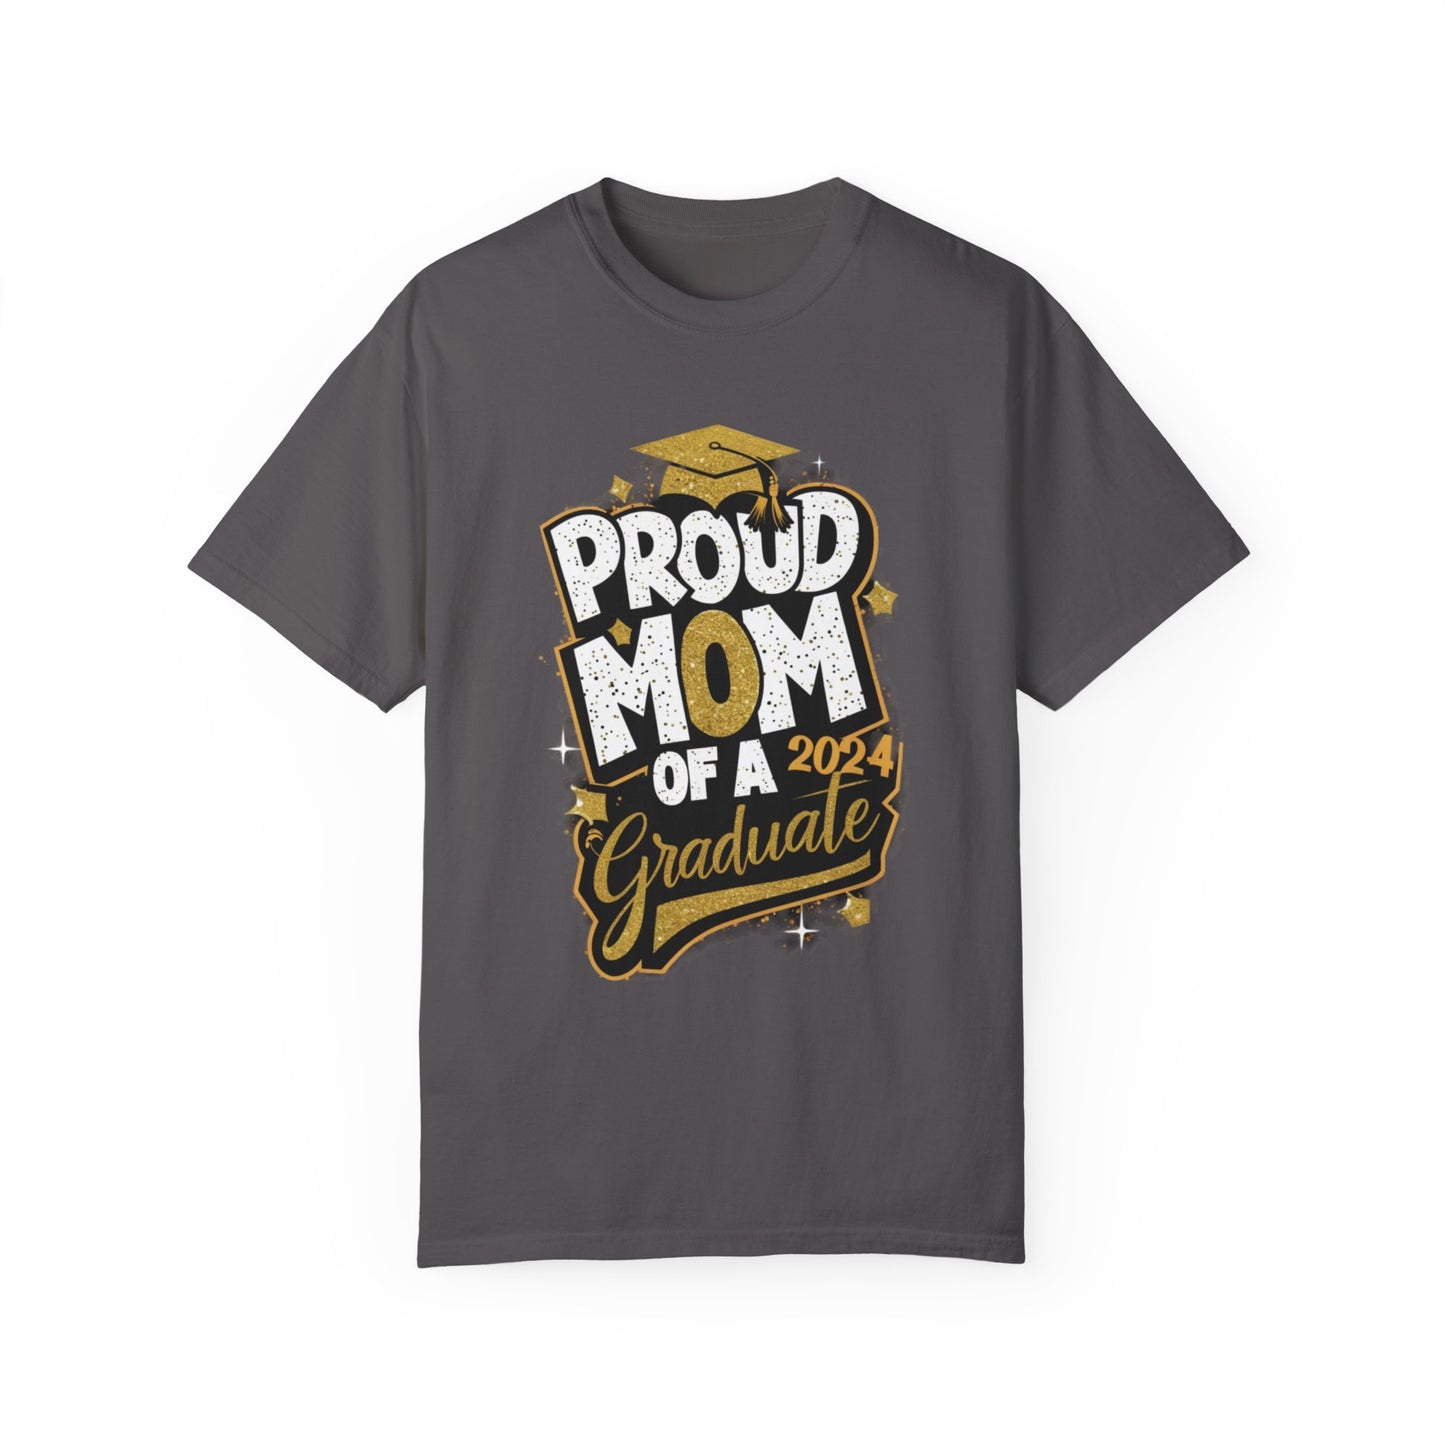 Proud Mom of a 2024 Graduate Unisex Garment-dyed T-shirt Cotton Funny Humorous Graphic Soft Premium Unisex Men Women Graphite T-shirt Birthday Gift-8